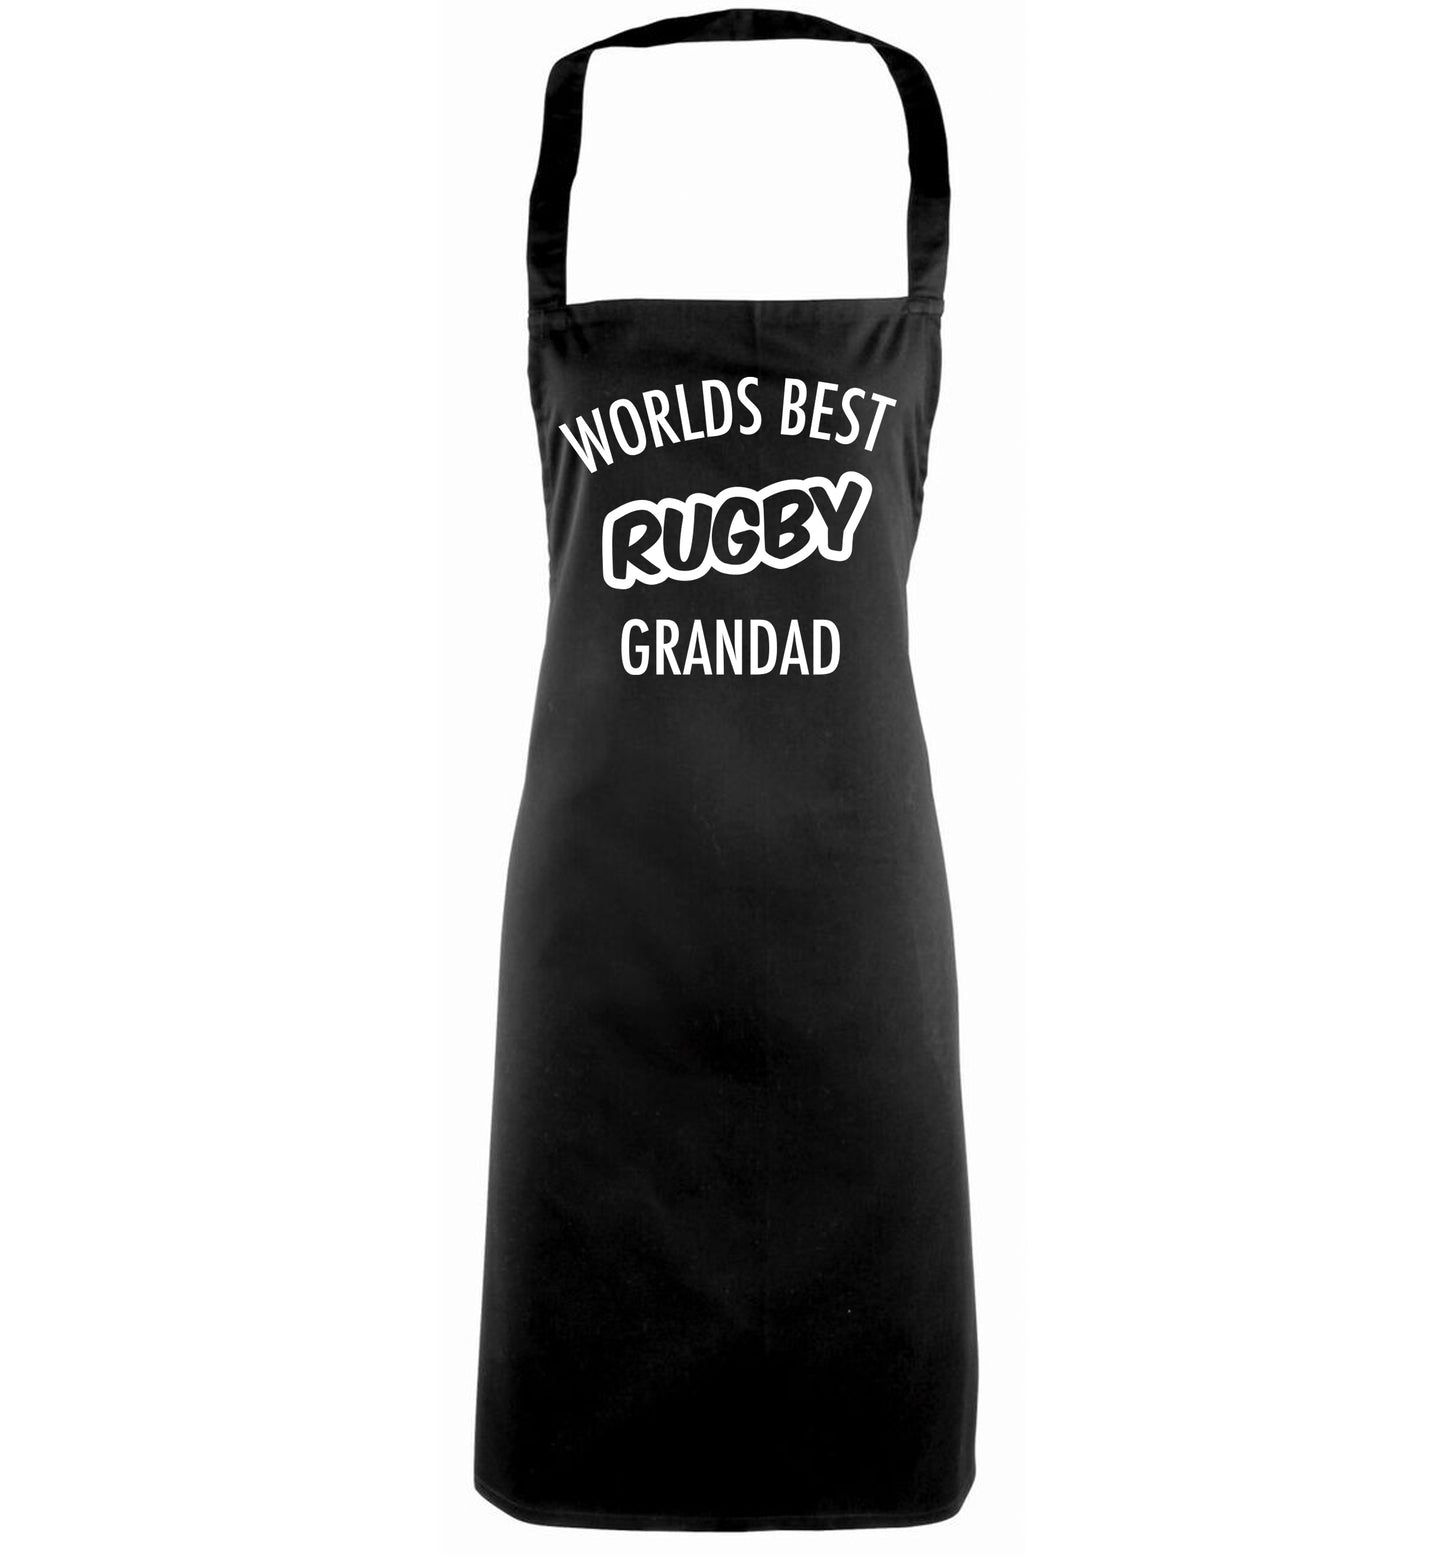 Worlds best rugby grandad black apron